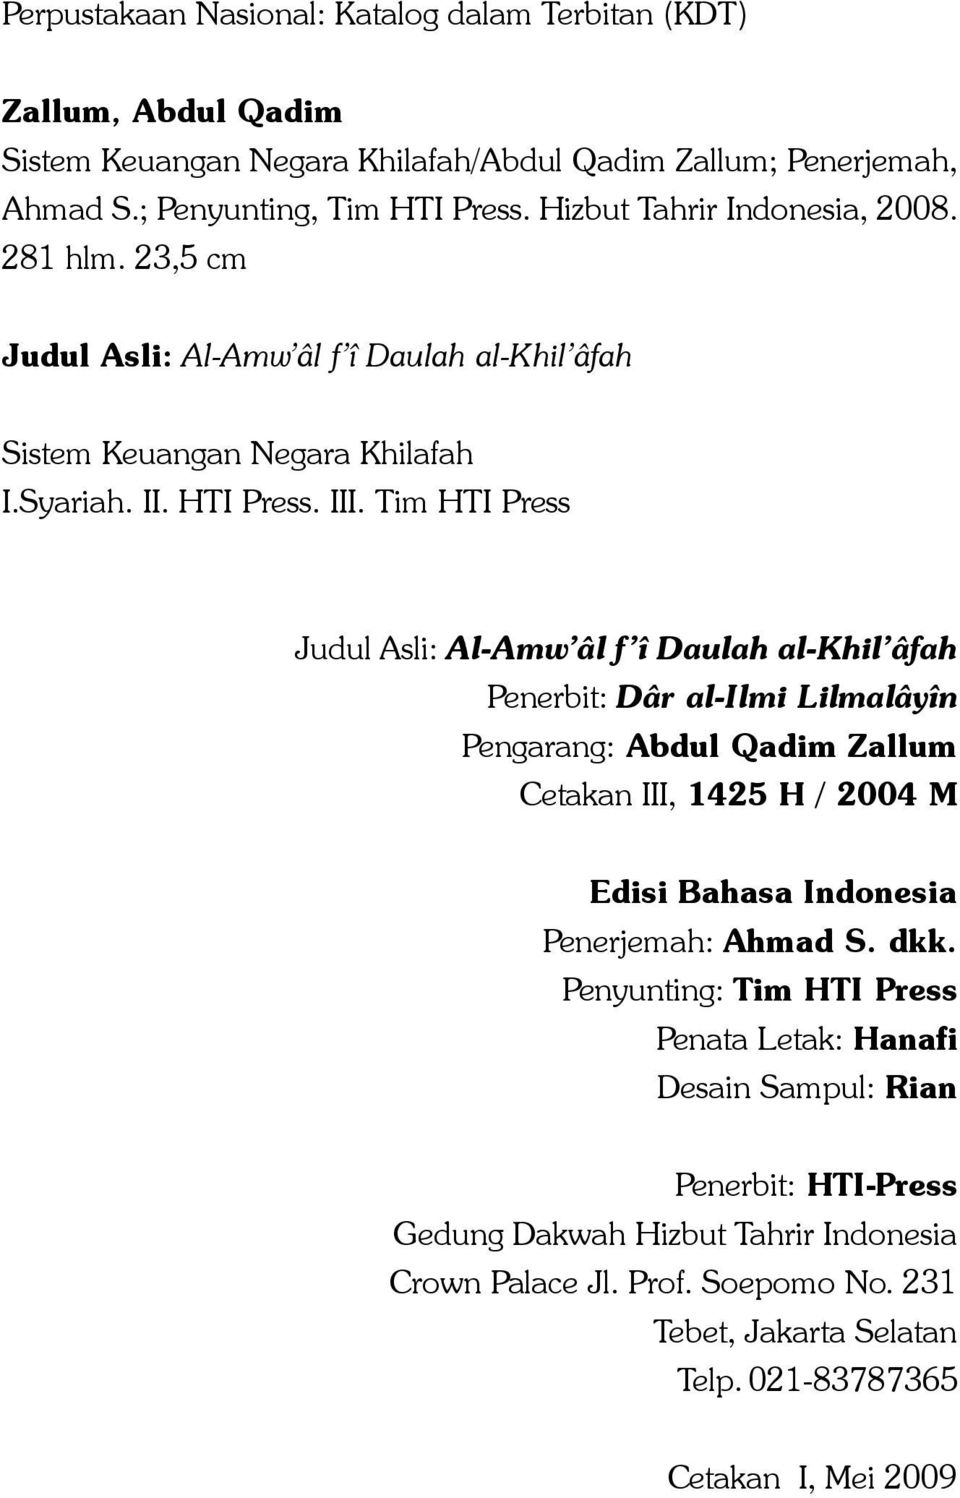 Tim HTI Press Judul Asli: Al-Amw âl f î Daulah al-khil âfah Penerbit: Dâr al-ilmi Lilmalâyîn Pengarang: Abdul Qadim Zallum Cetakan III, 1425 H / 2004 M Edisi Bahasa Indonesia Penerjemah: